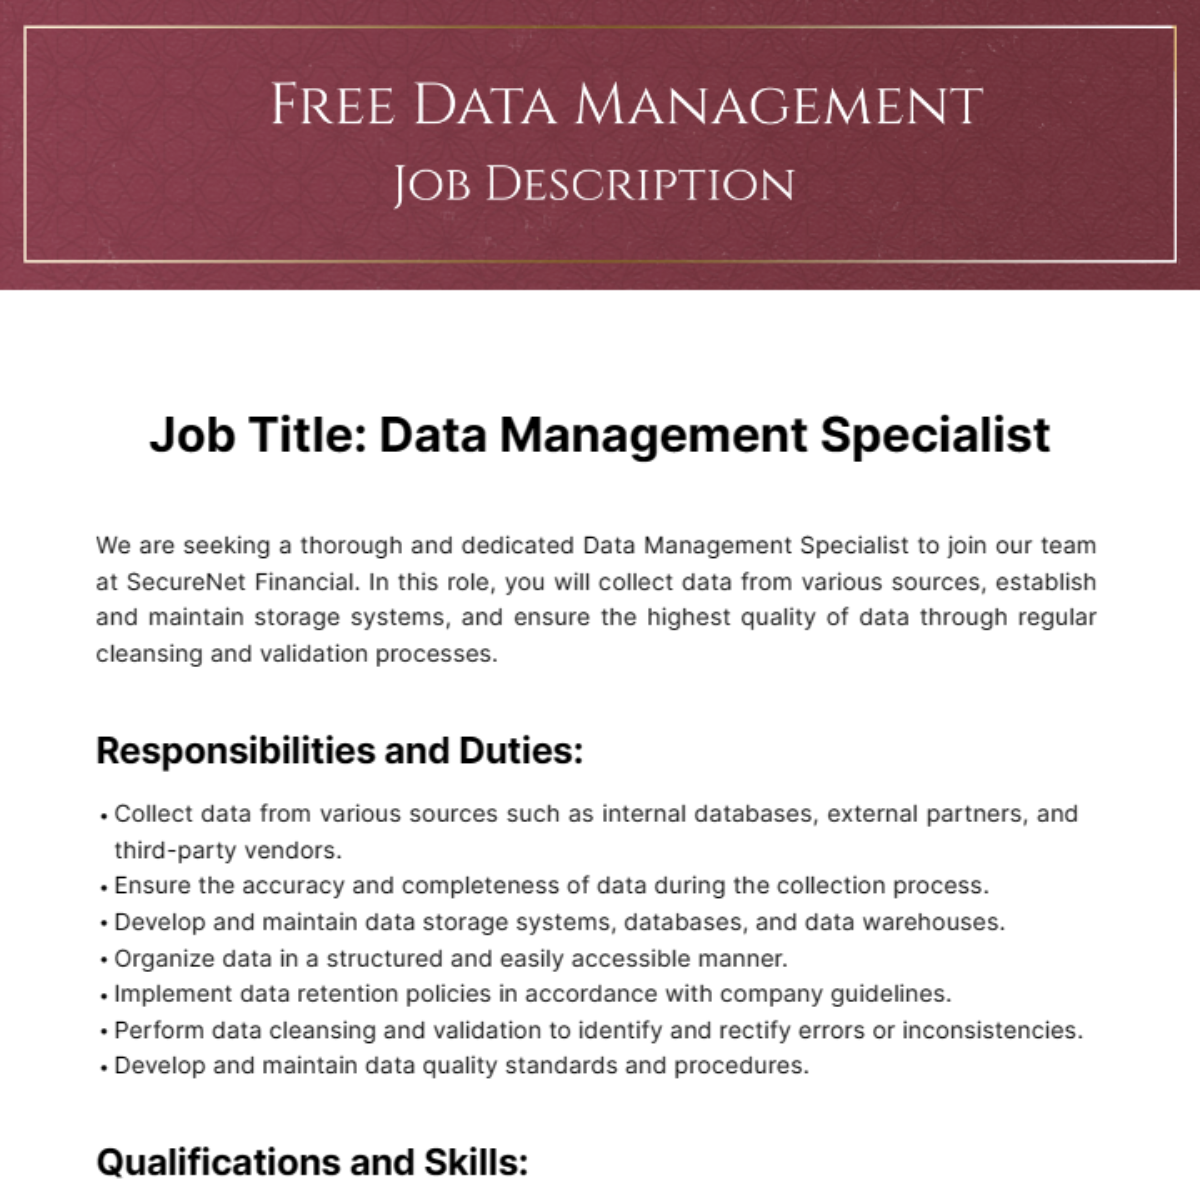 Free Data Management Job Description Template